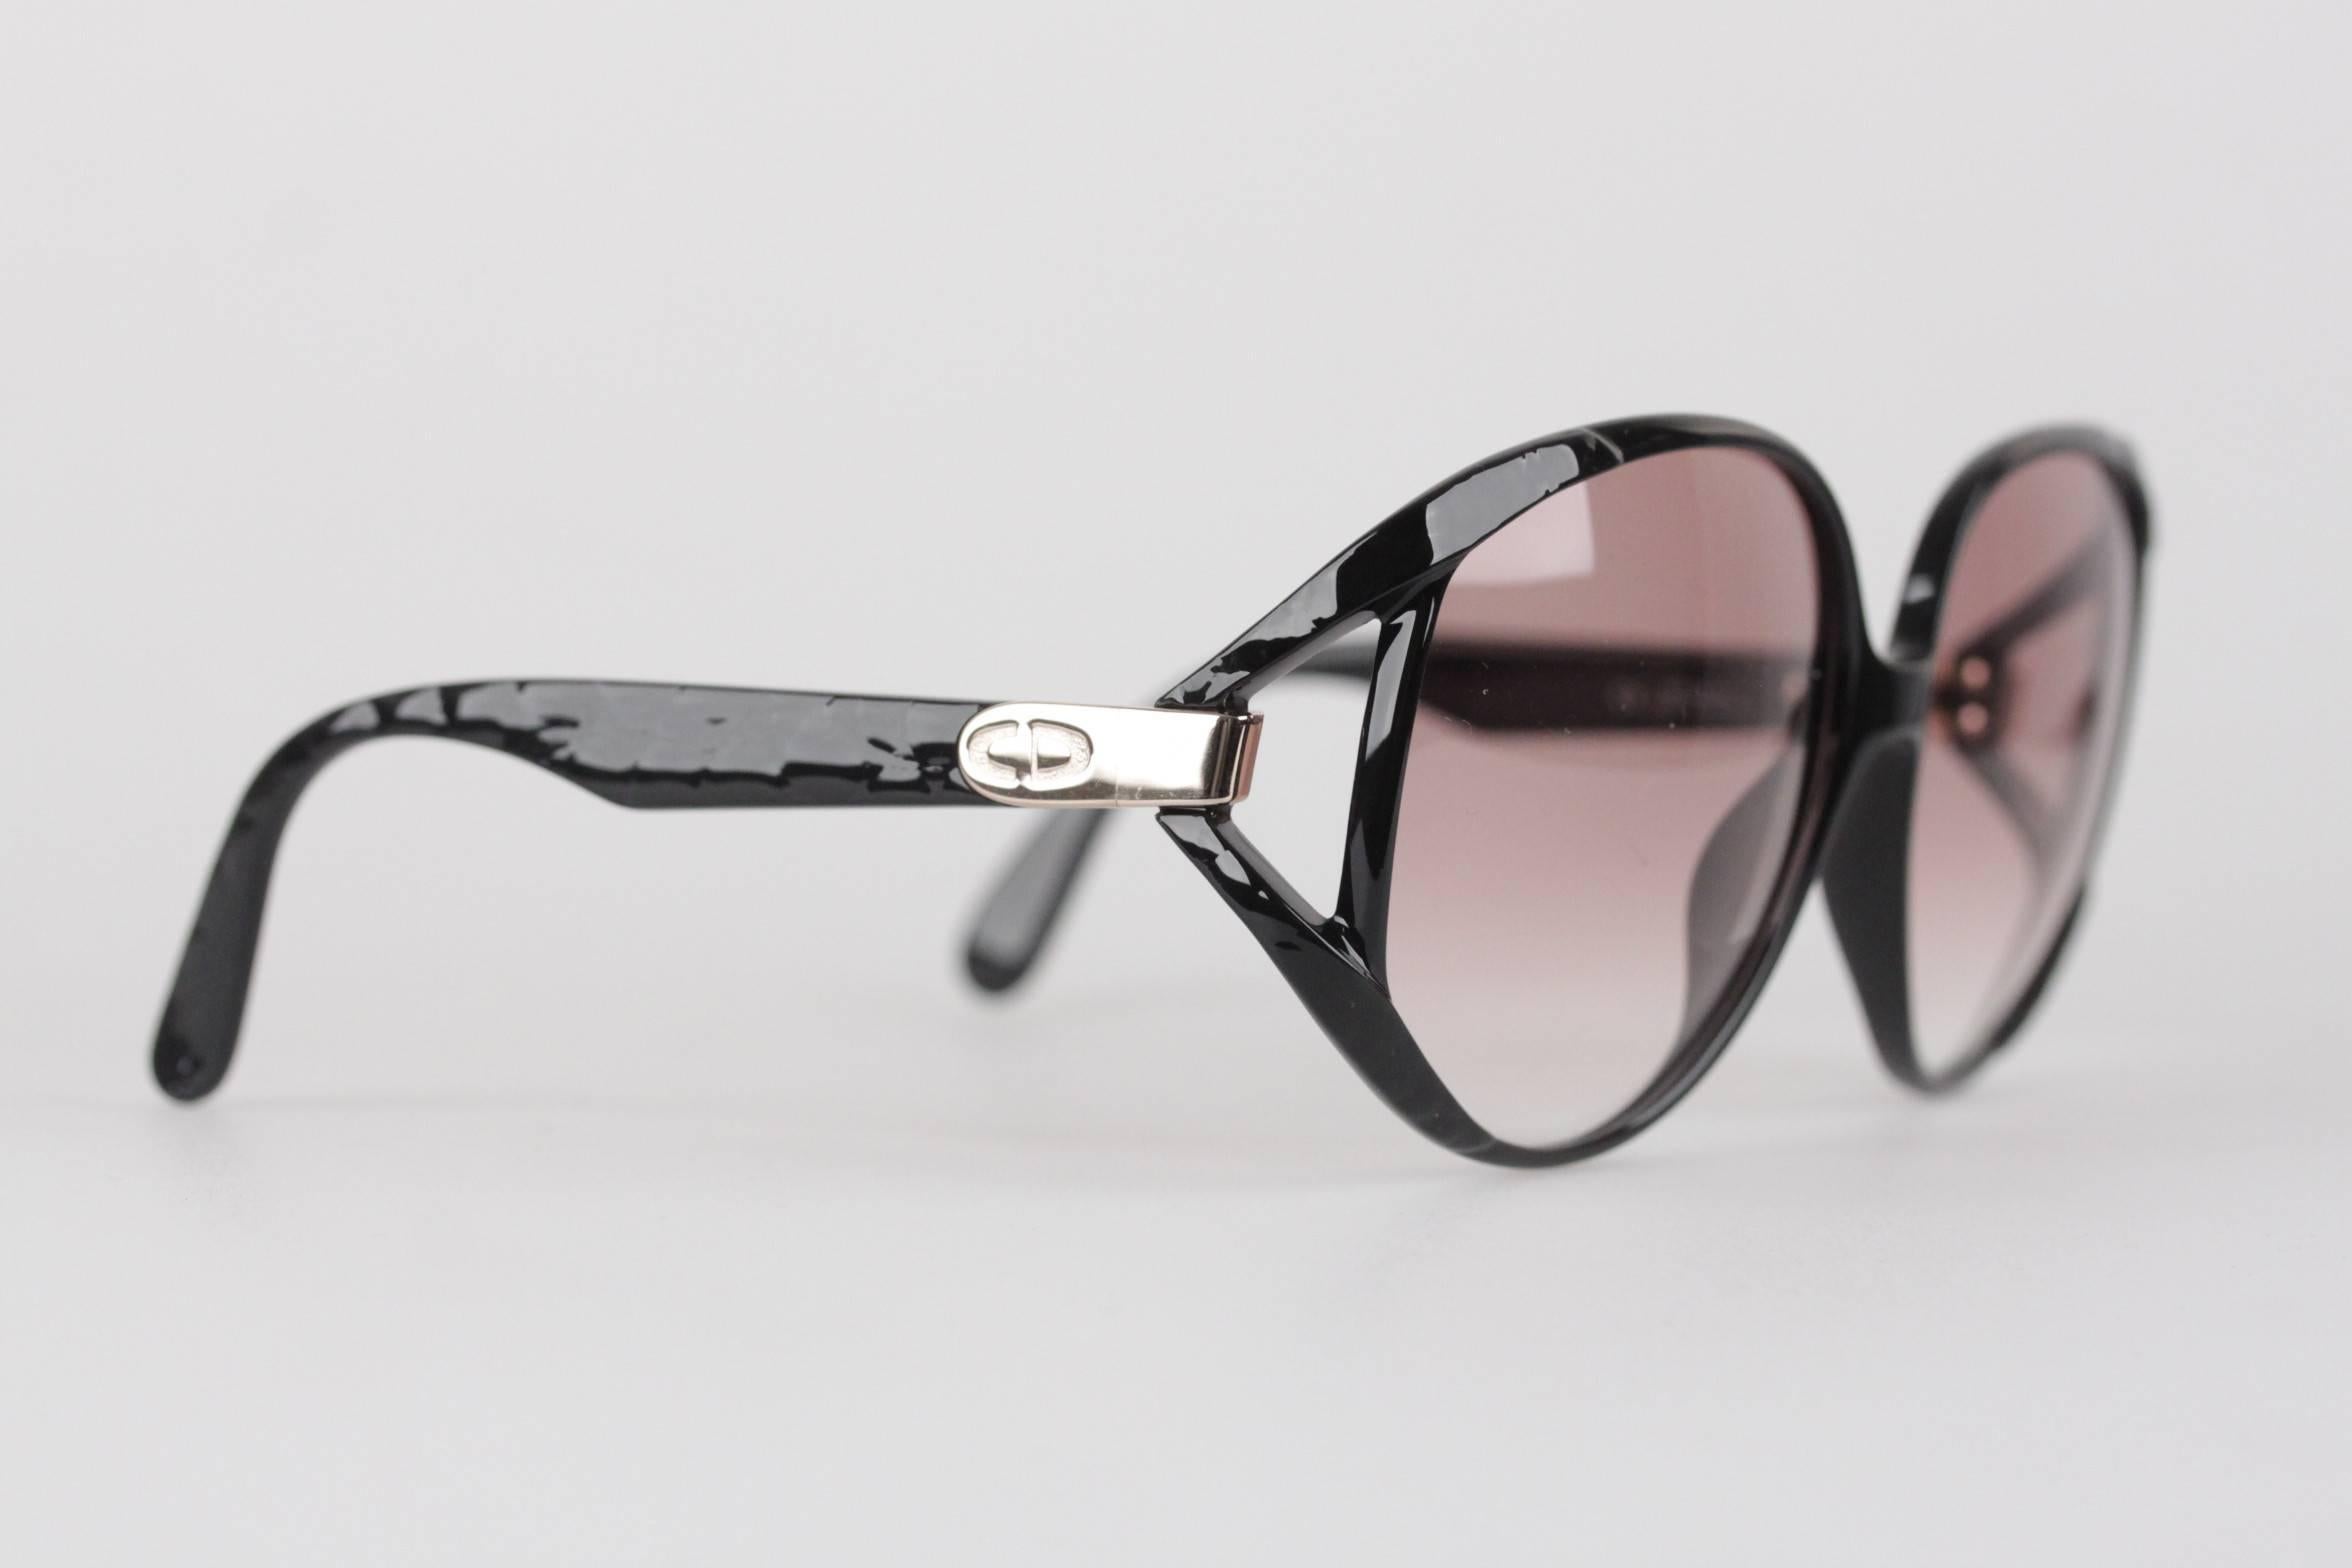 XL, Oversized DIVA sunglasses, by DIOR

Black, 